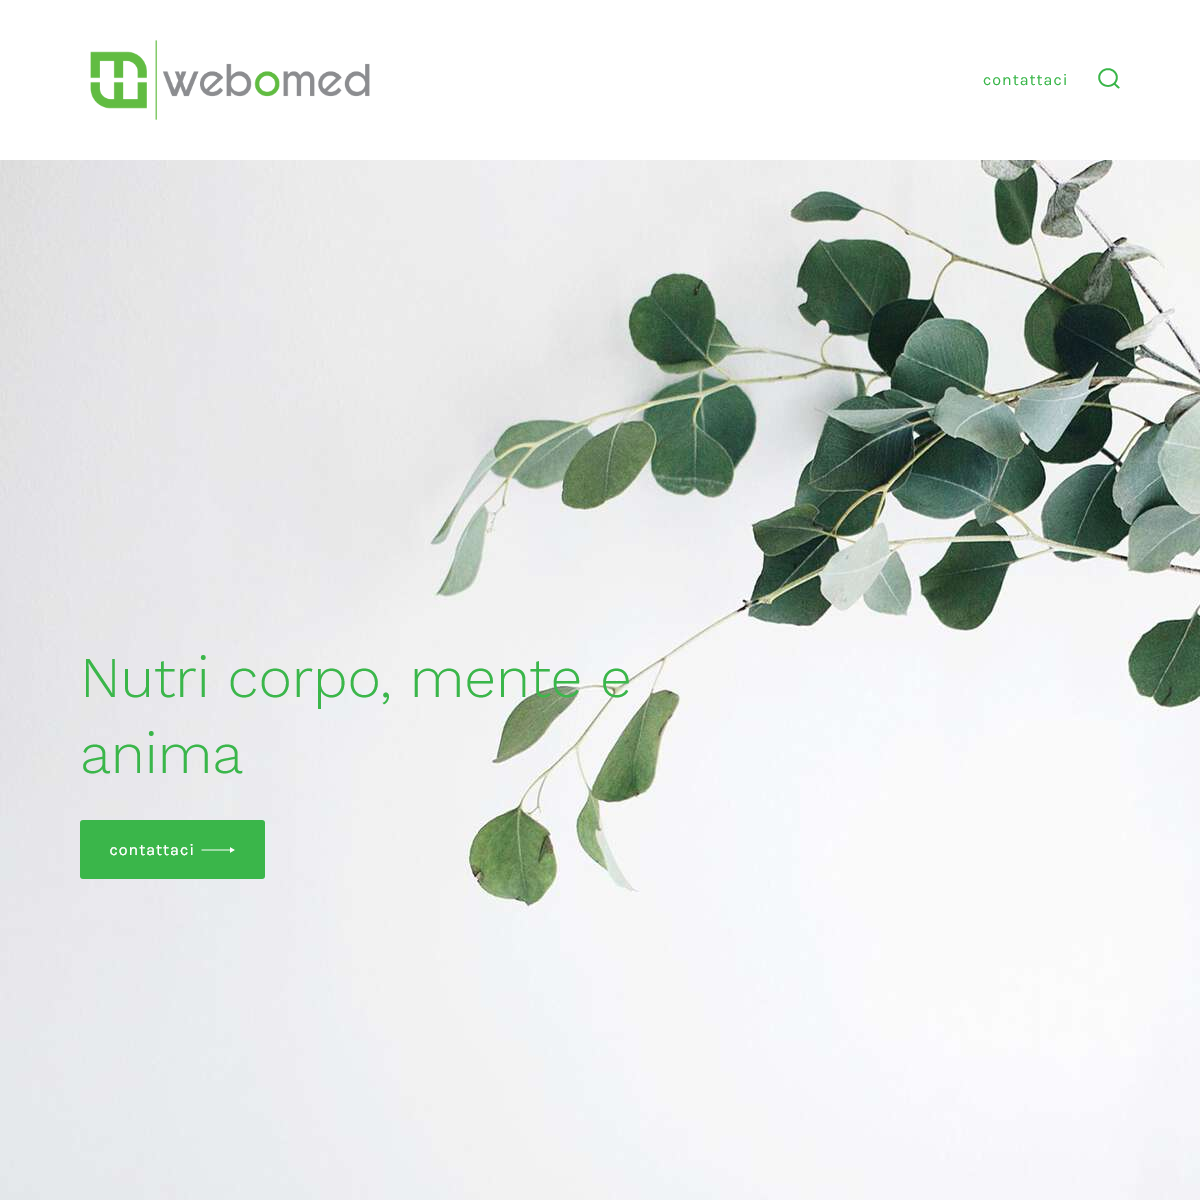 A complete backup of webomed.com